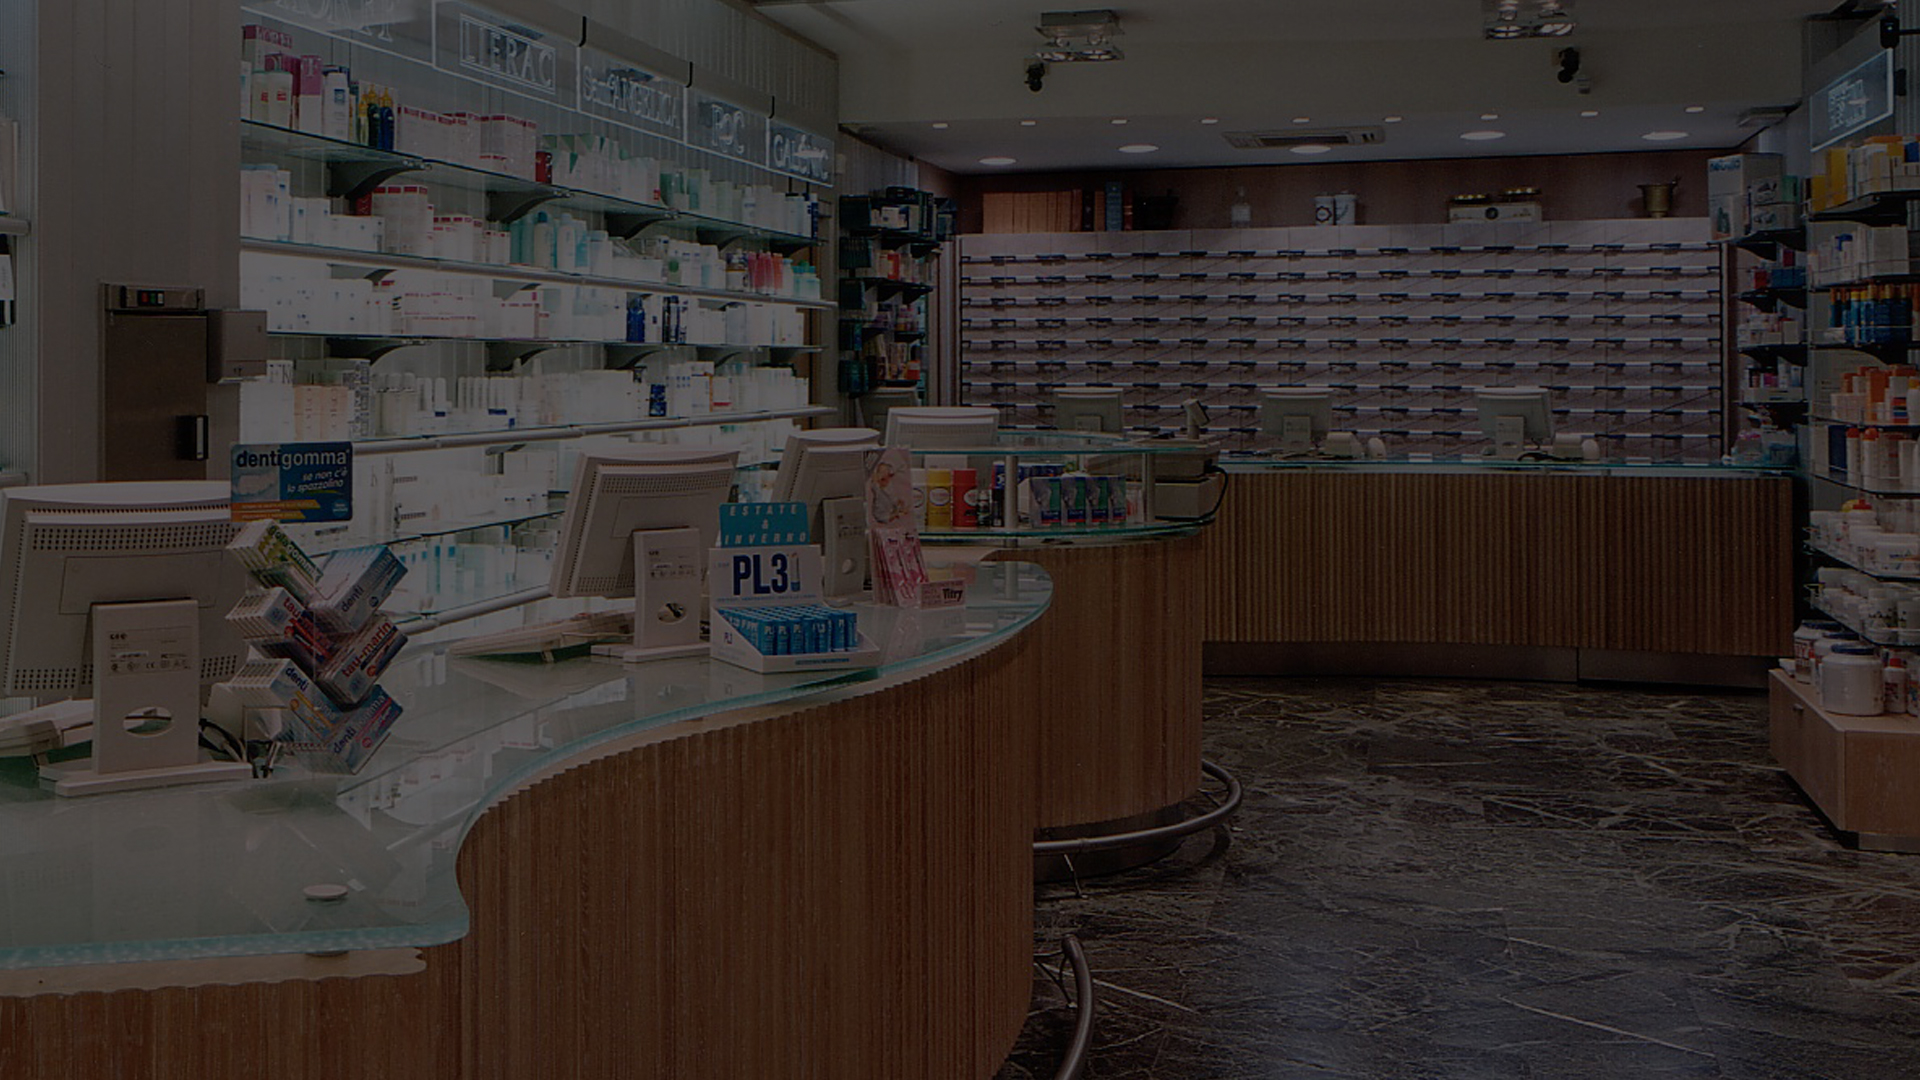 Farmacia storica in Milano